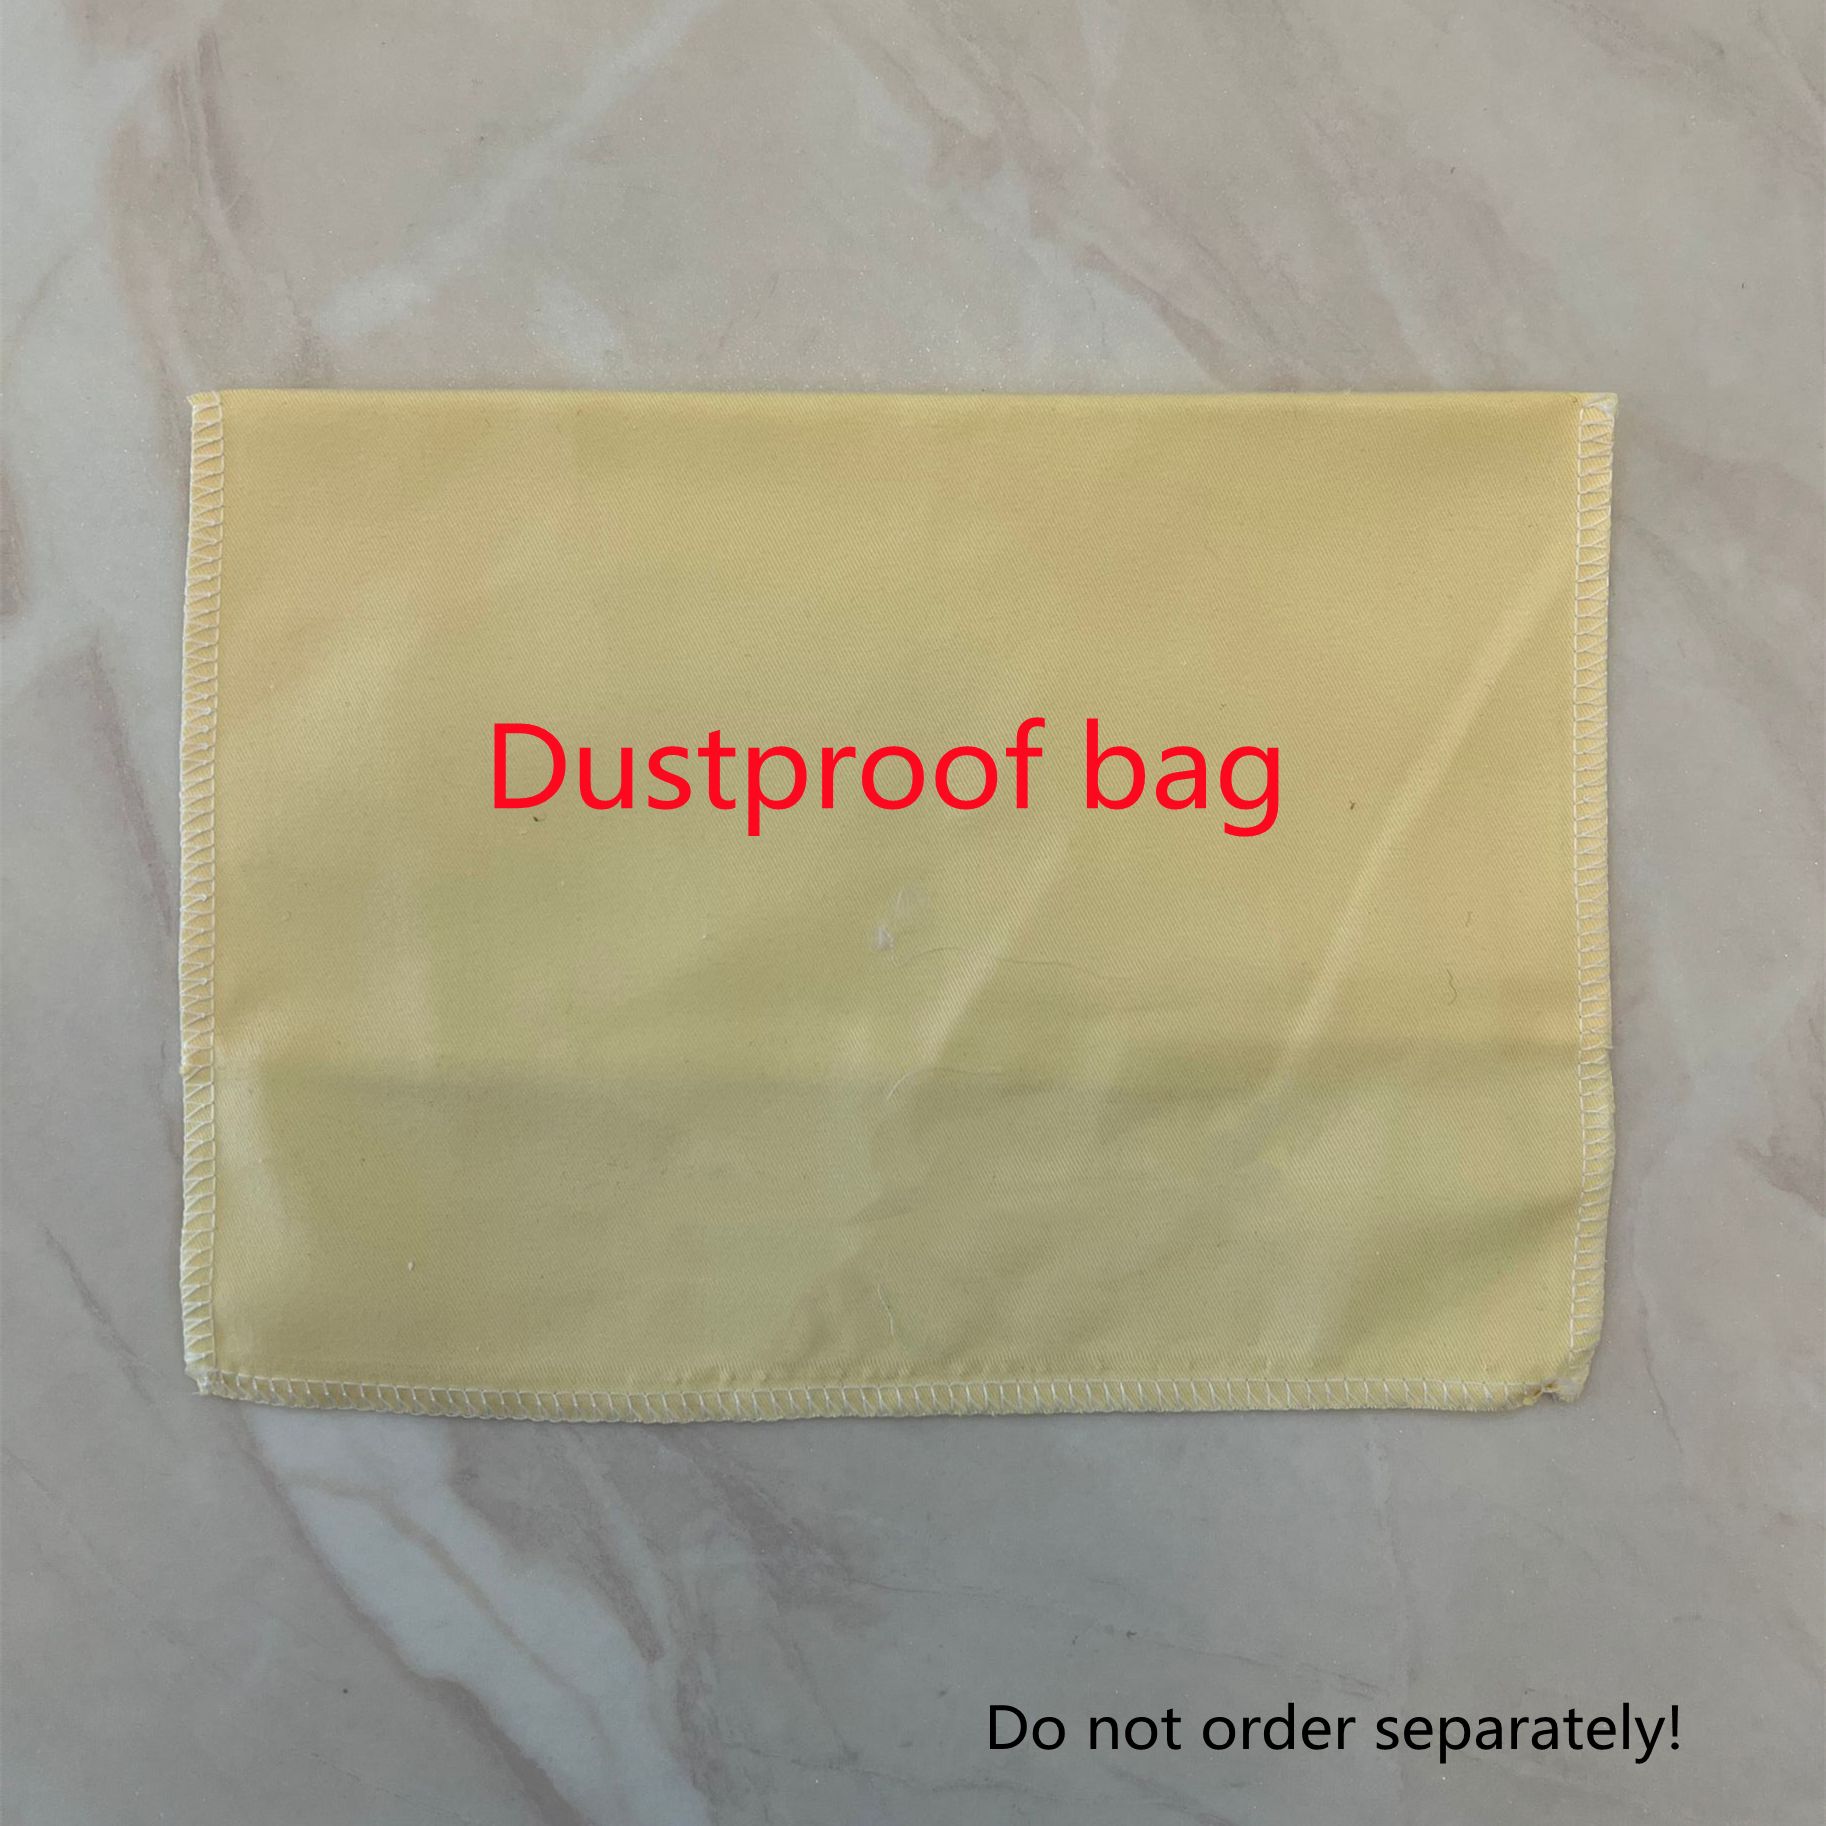 Dustproof bag